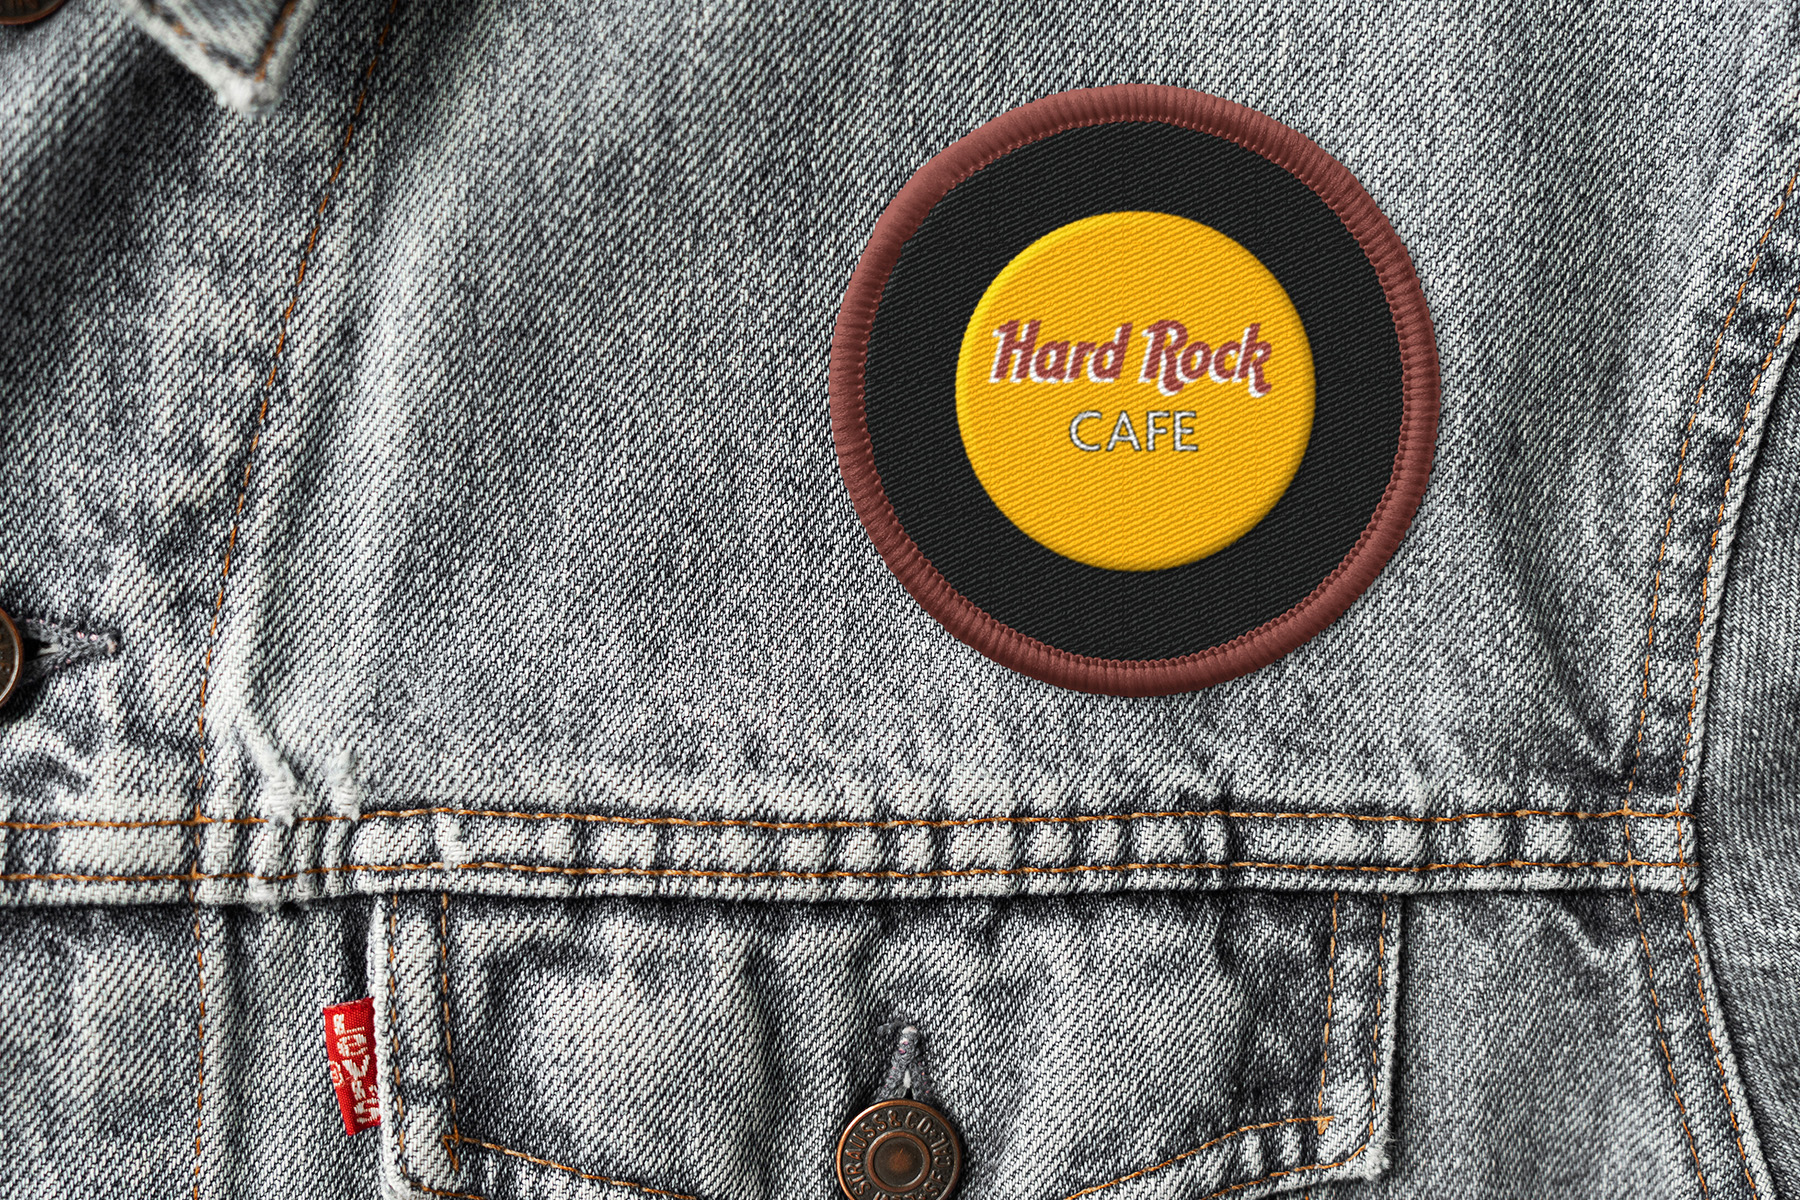 Hard Rock Cafe Patch on jean jacket